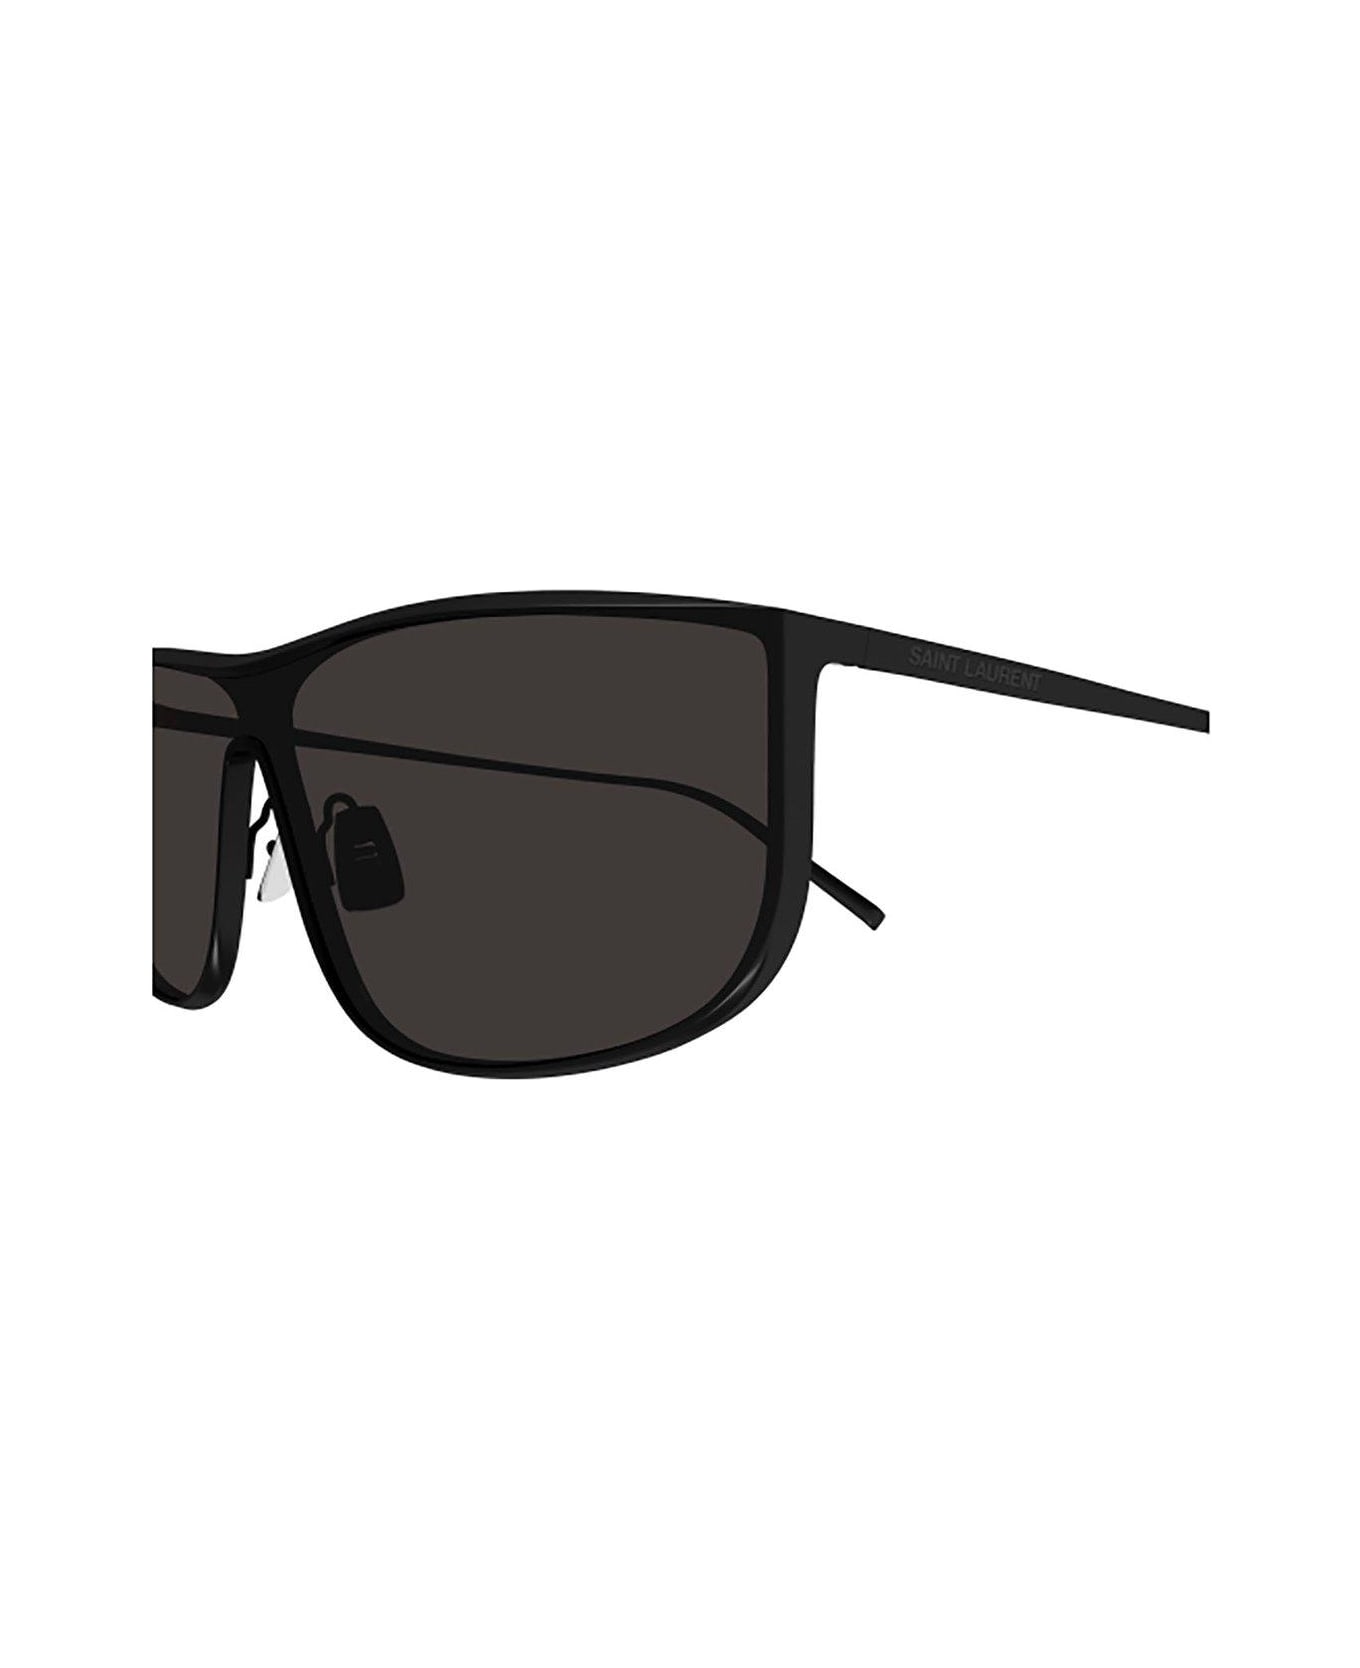 Saint Laurent Eyewear Sl 605 Luna Rectangular Frame Sunglasses - 002 black black black サングラス